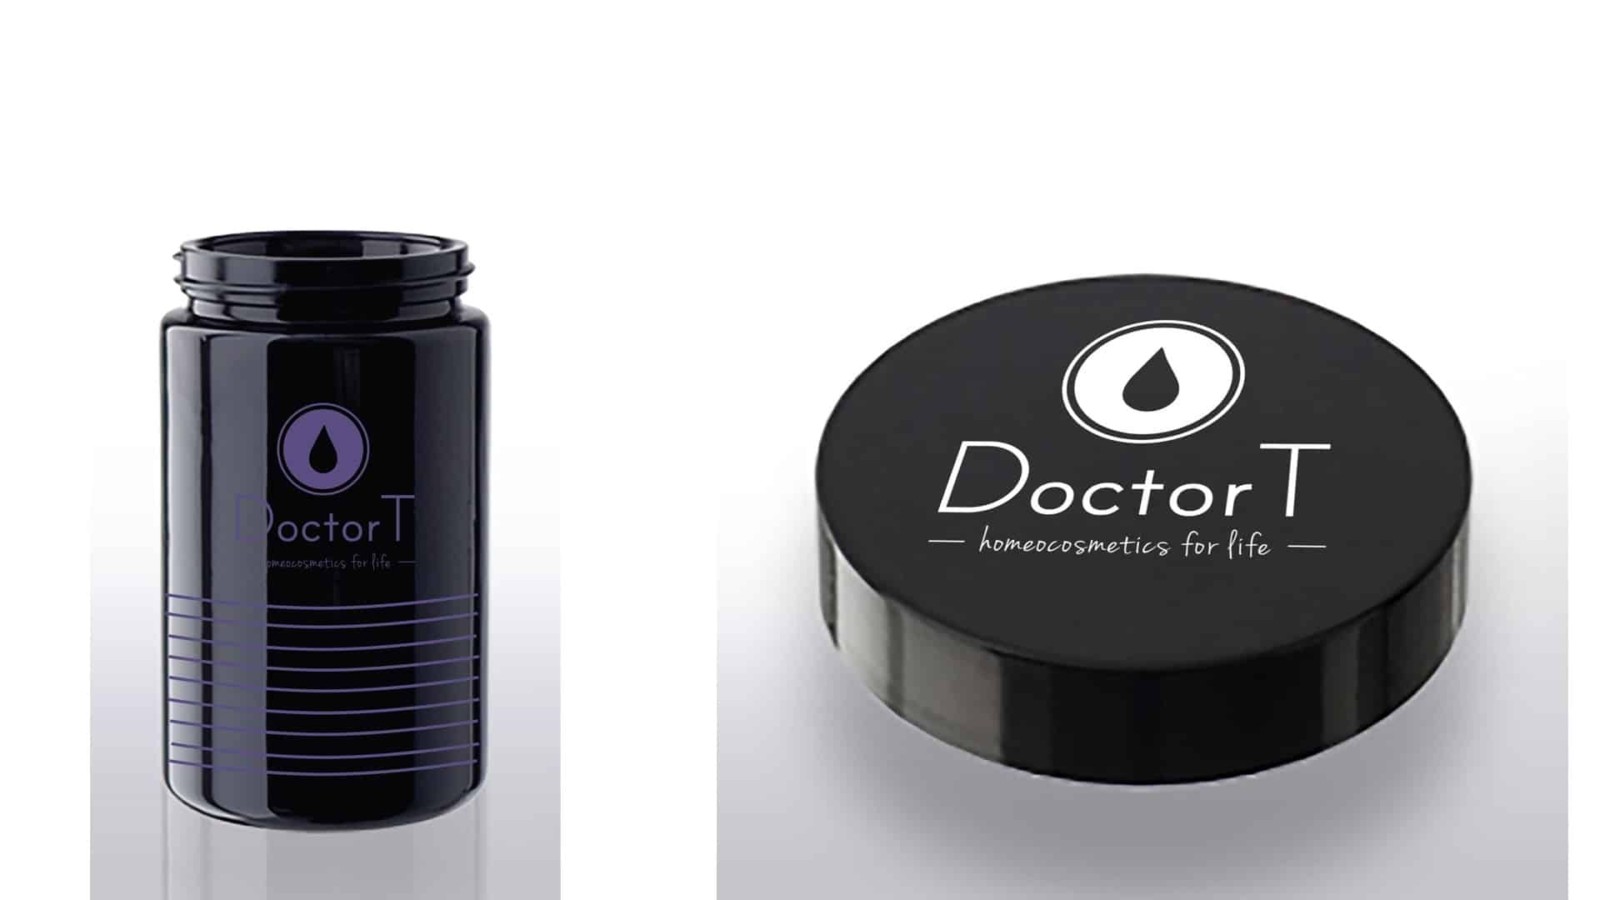 Doctor T visual identity logo colors fonts homeocosmetics